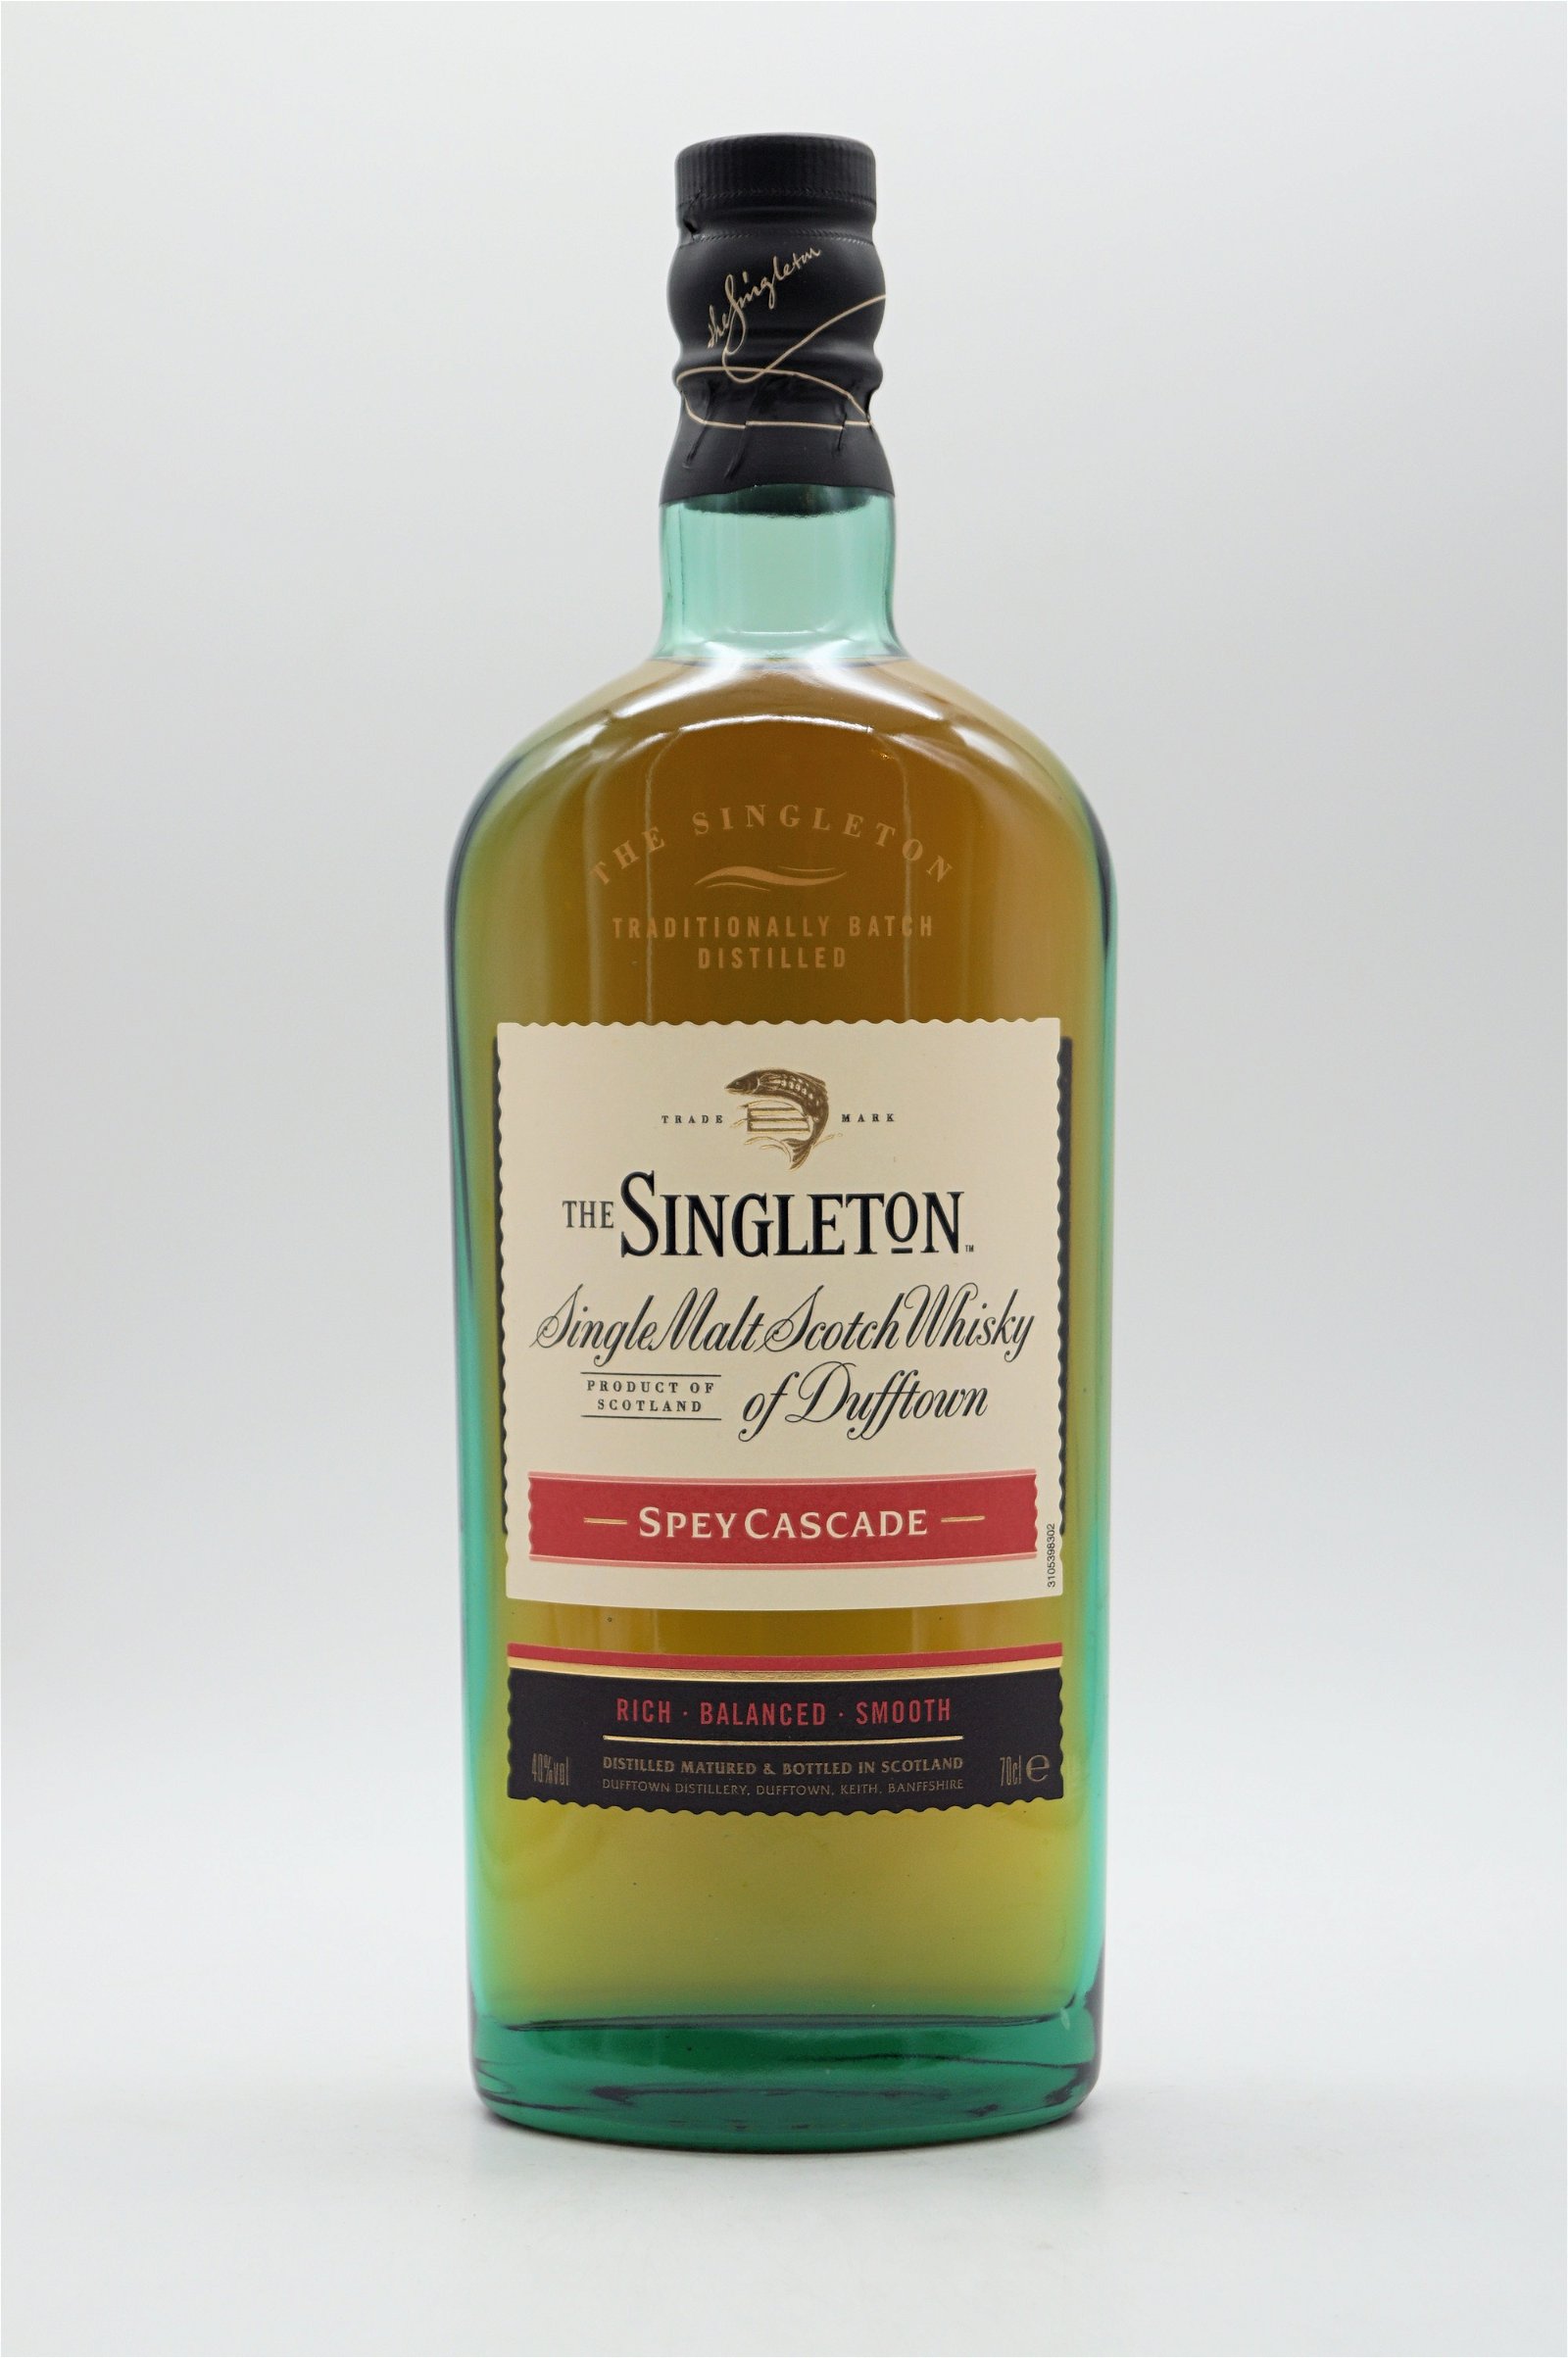 The Singleton of Dufftown Spey Cascade Single Malt Scotch Whisky